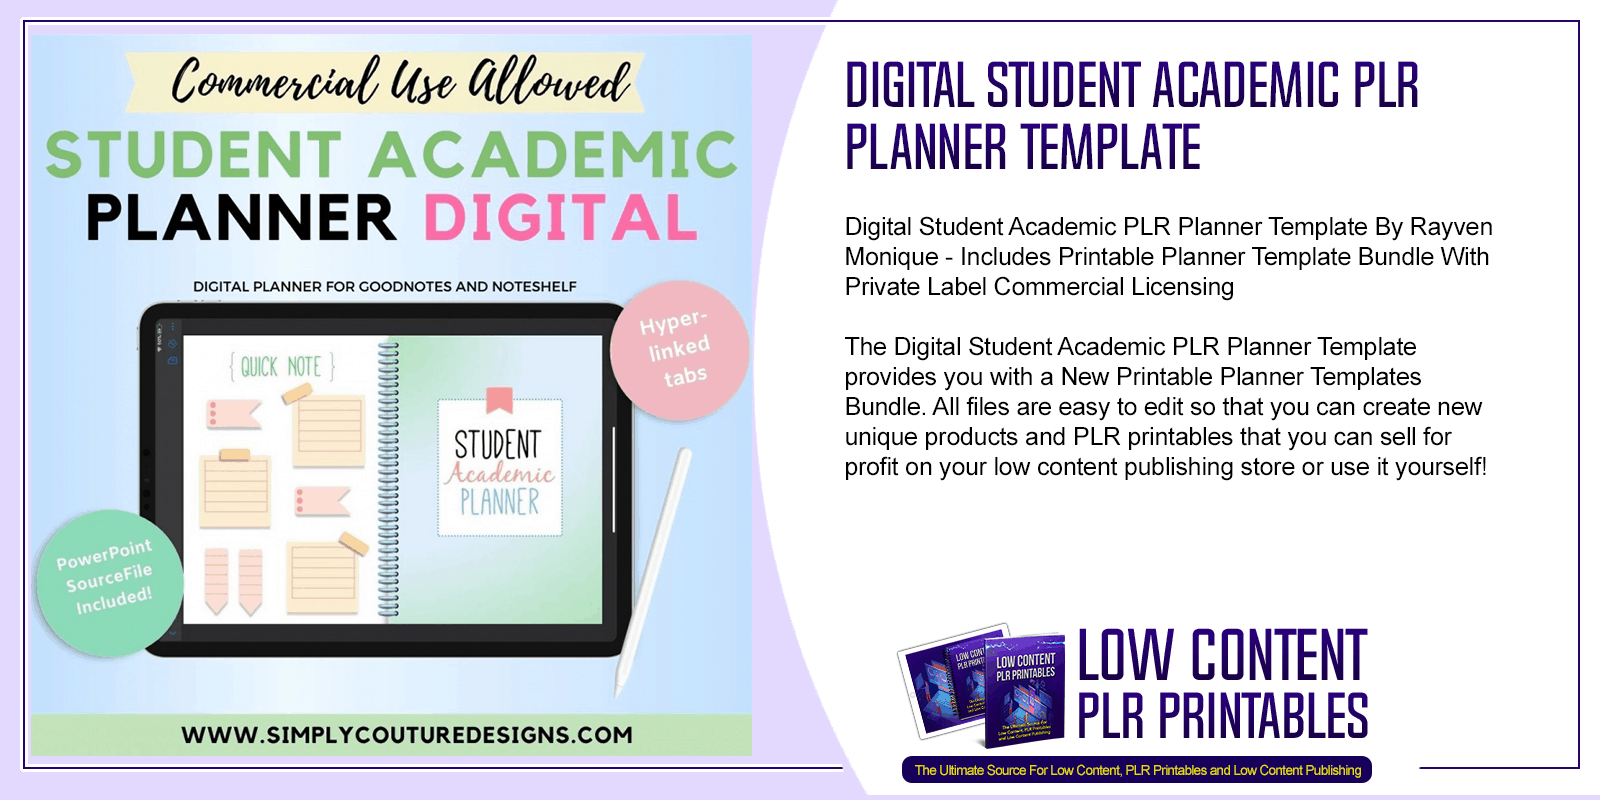 Digital Student Academic PLR Planner Template